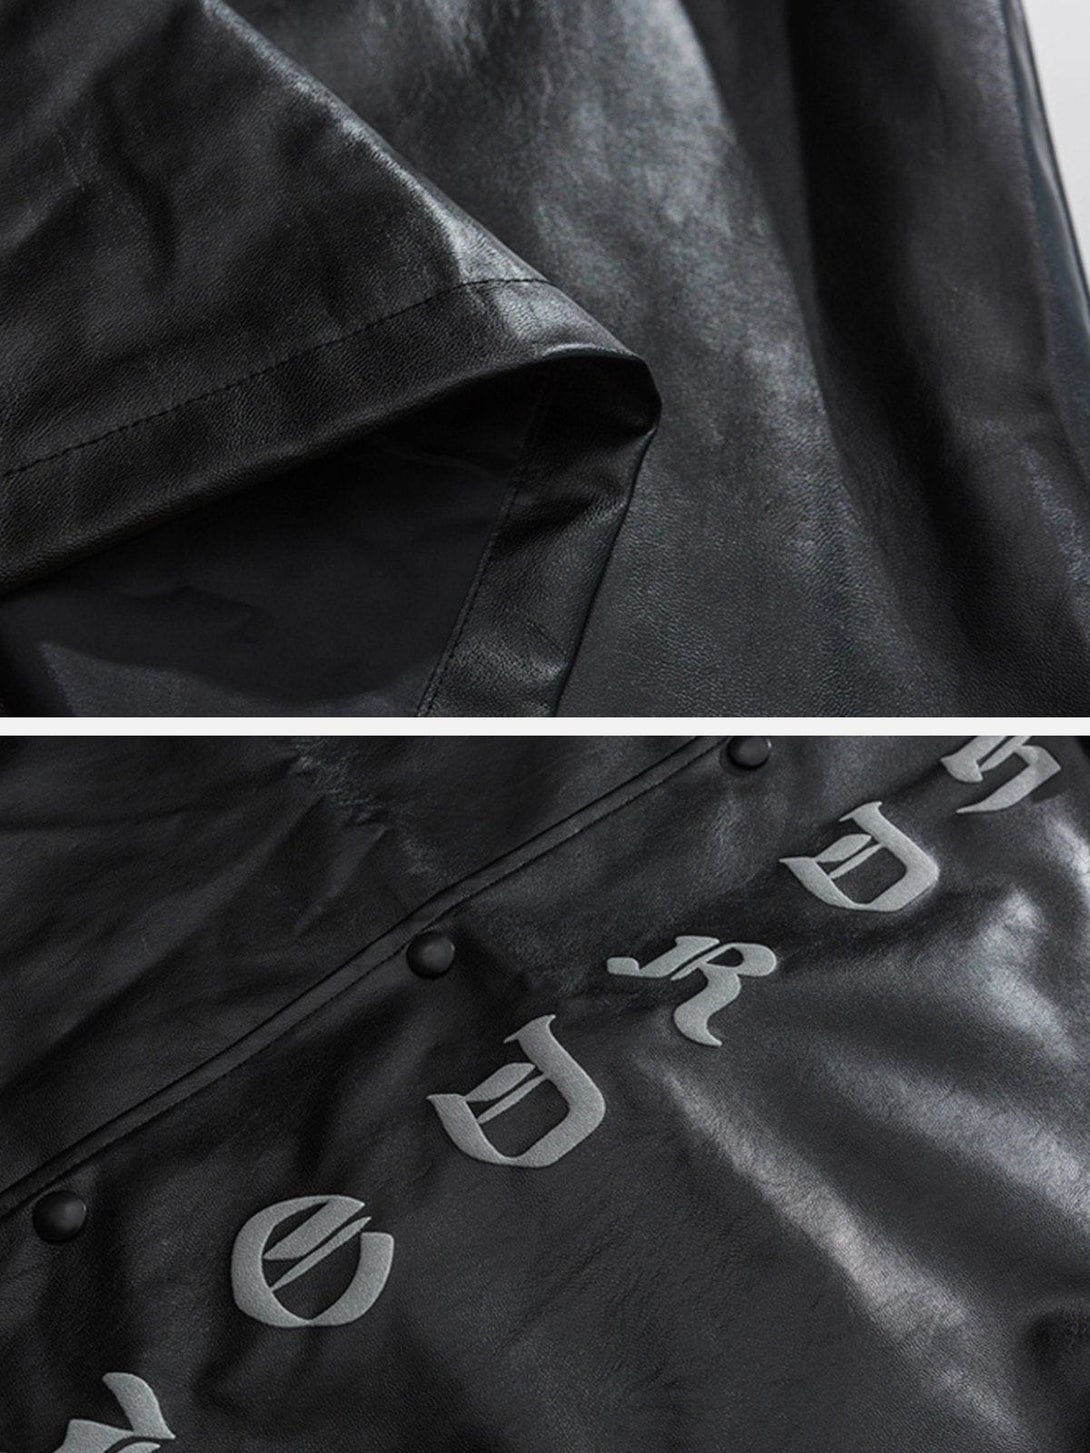 Levefly - Gothic Letter Print Leather Jacket - Streetwear Fashion - levefly.com